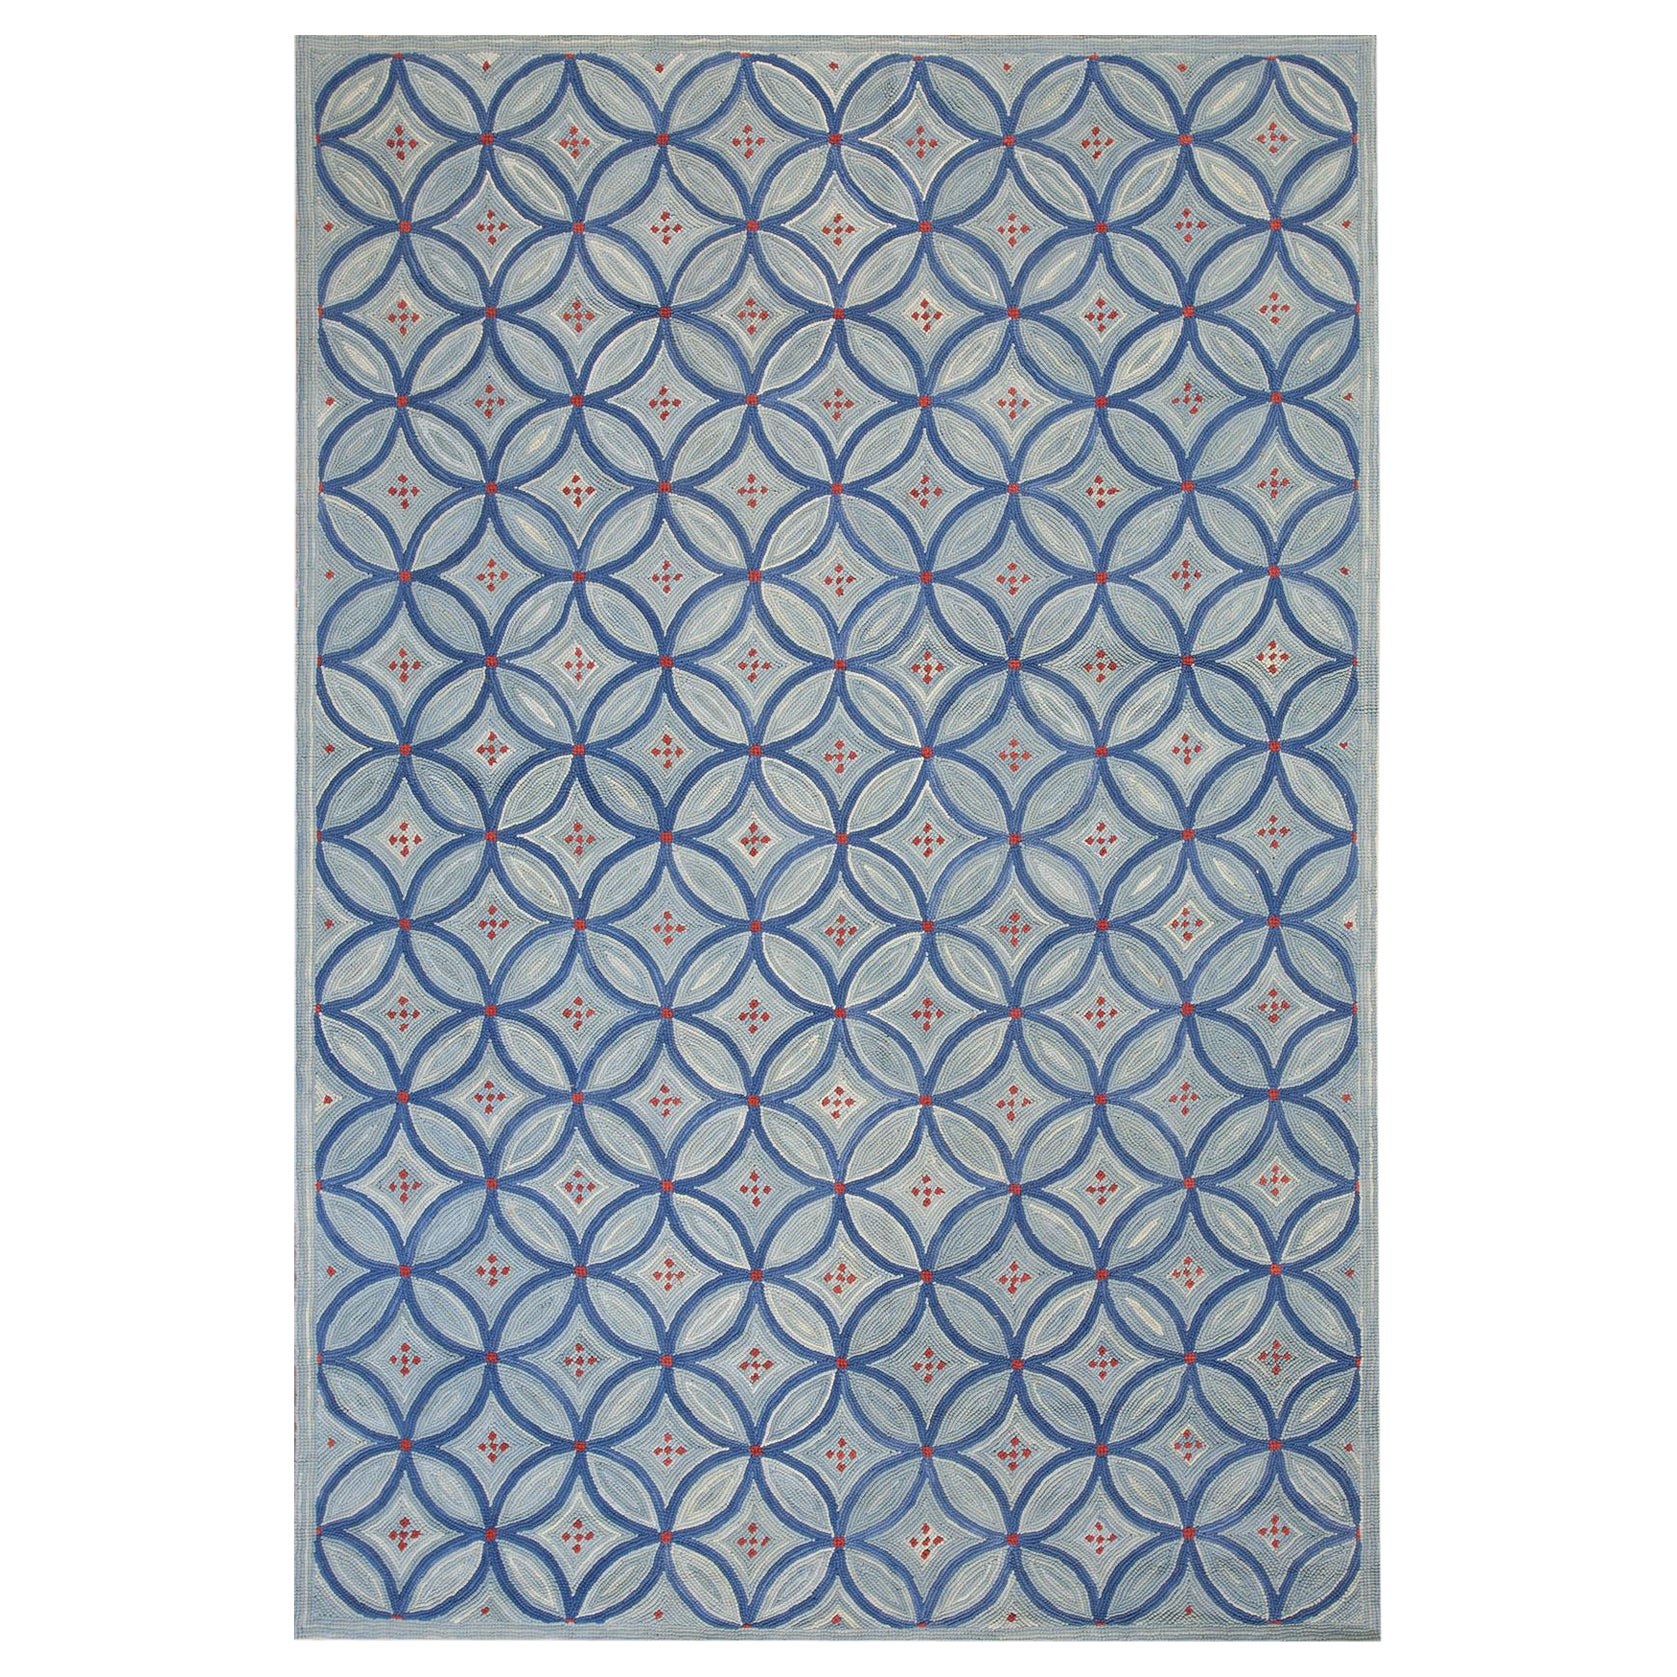 Contemporary Handmade Hooked Rug ( 6' x9' - 183 x 274 cm )